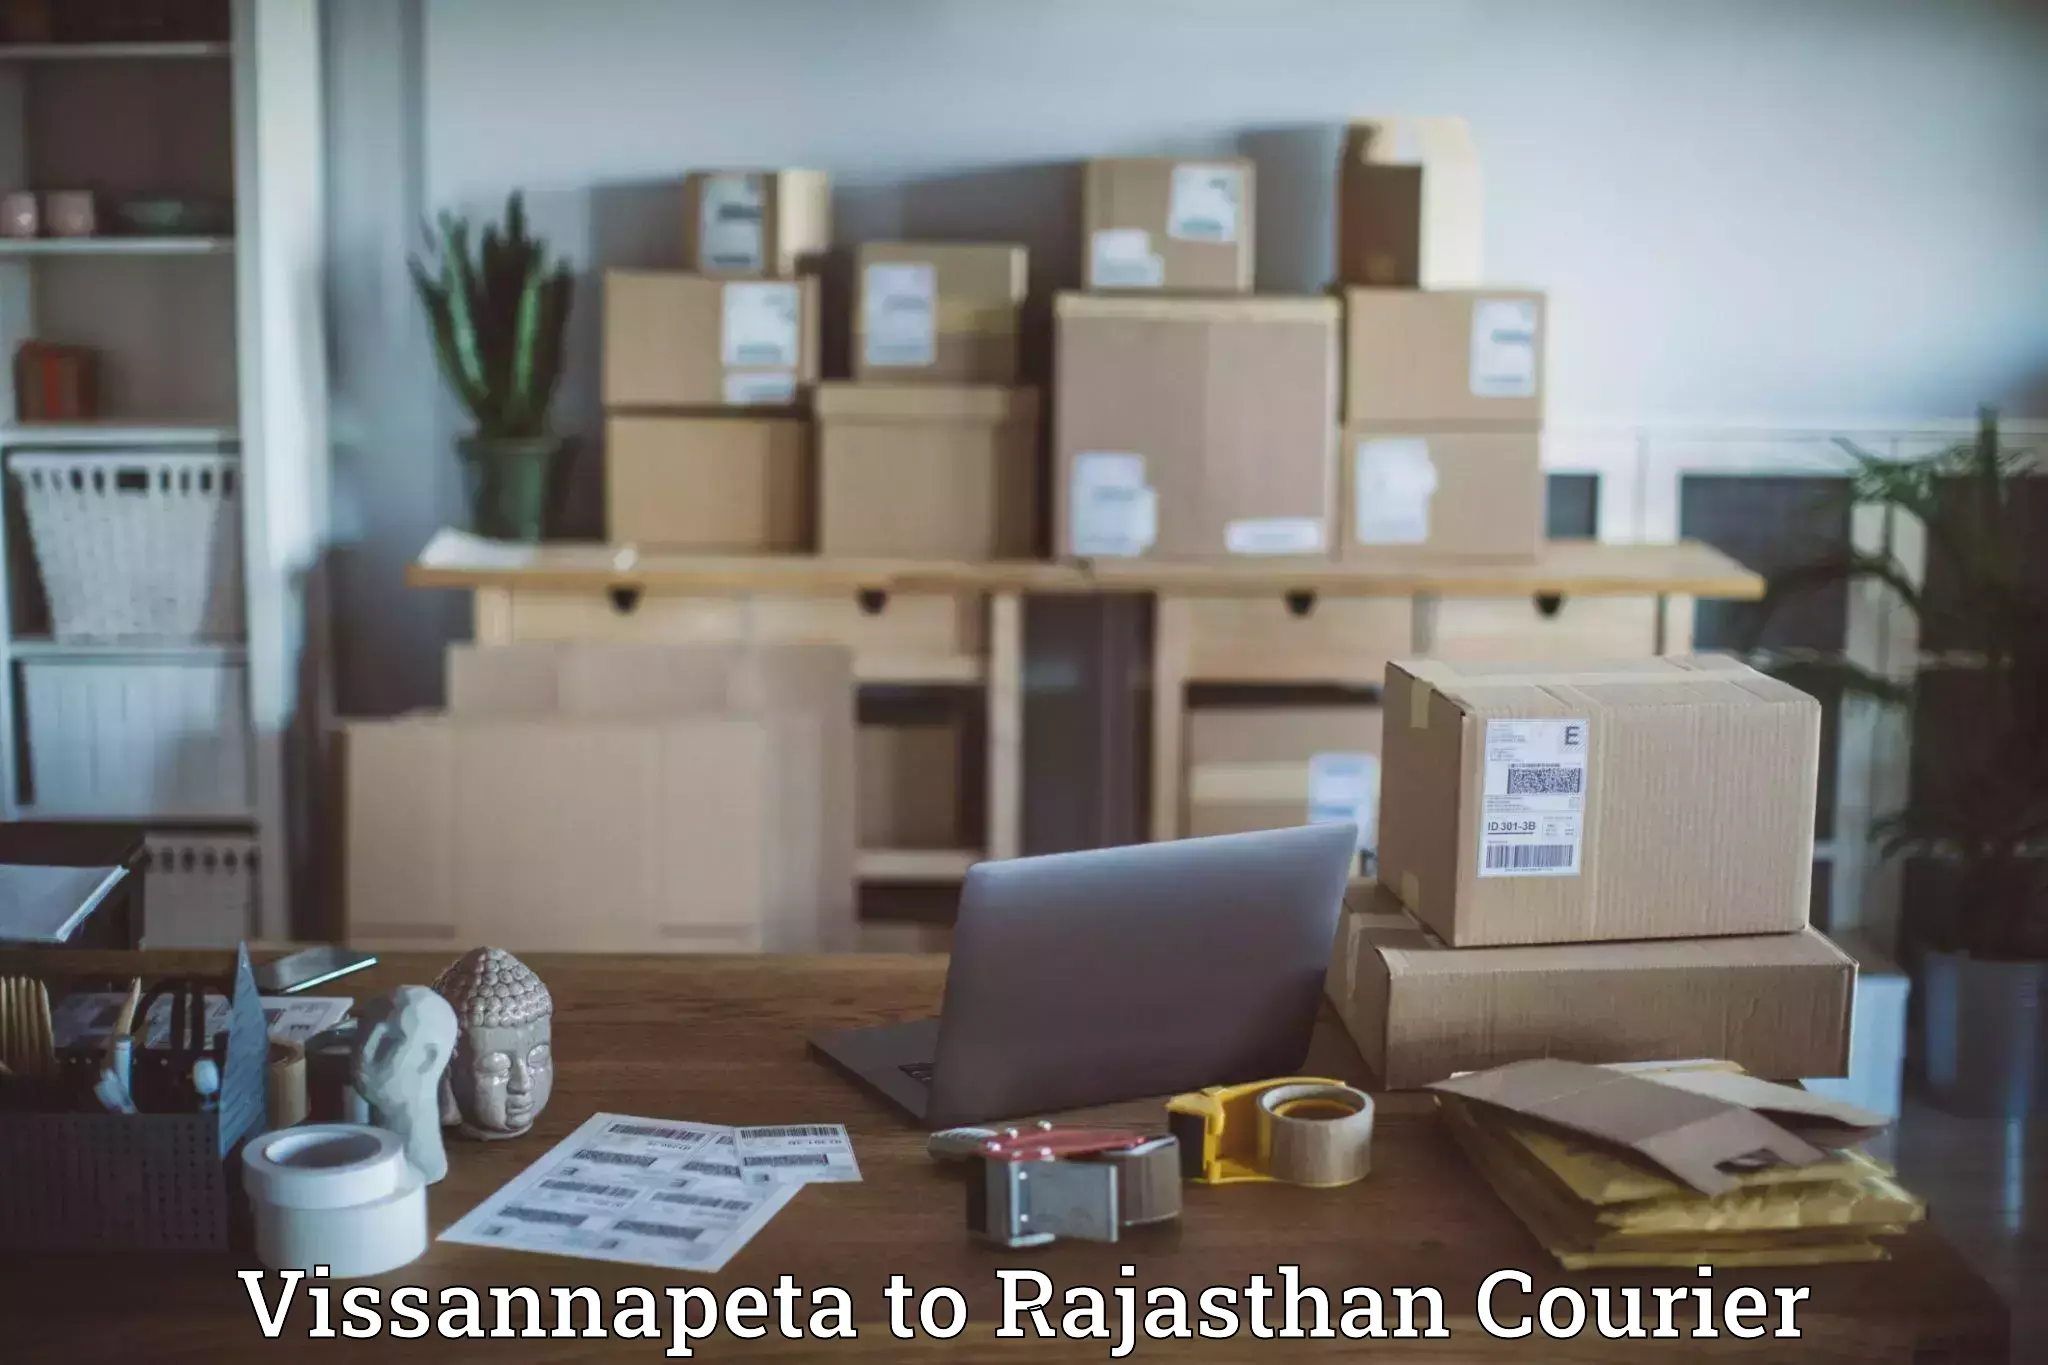 Nationwide parcel services Vissannapeta to Rajasthan